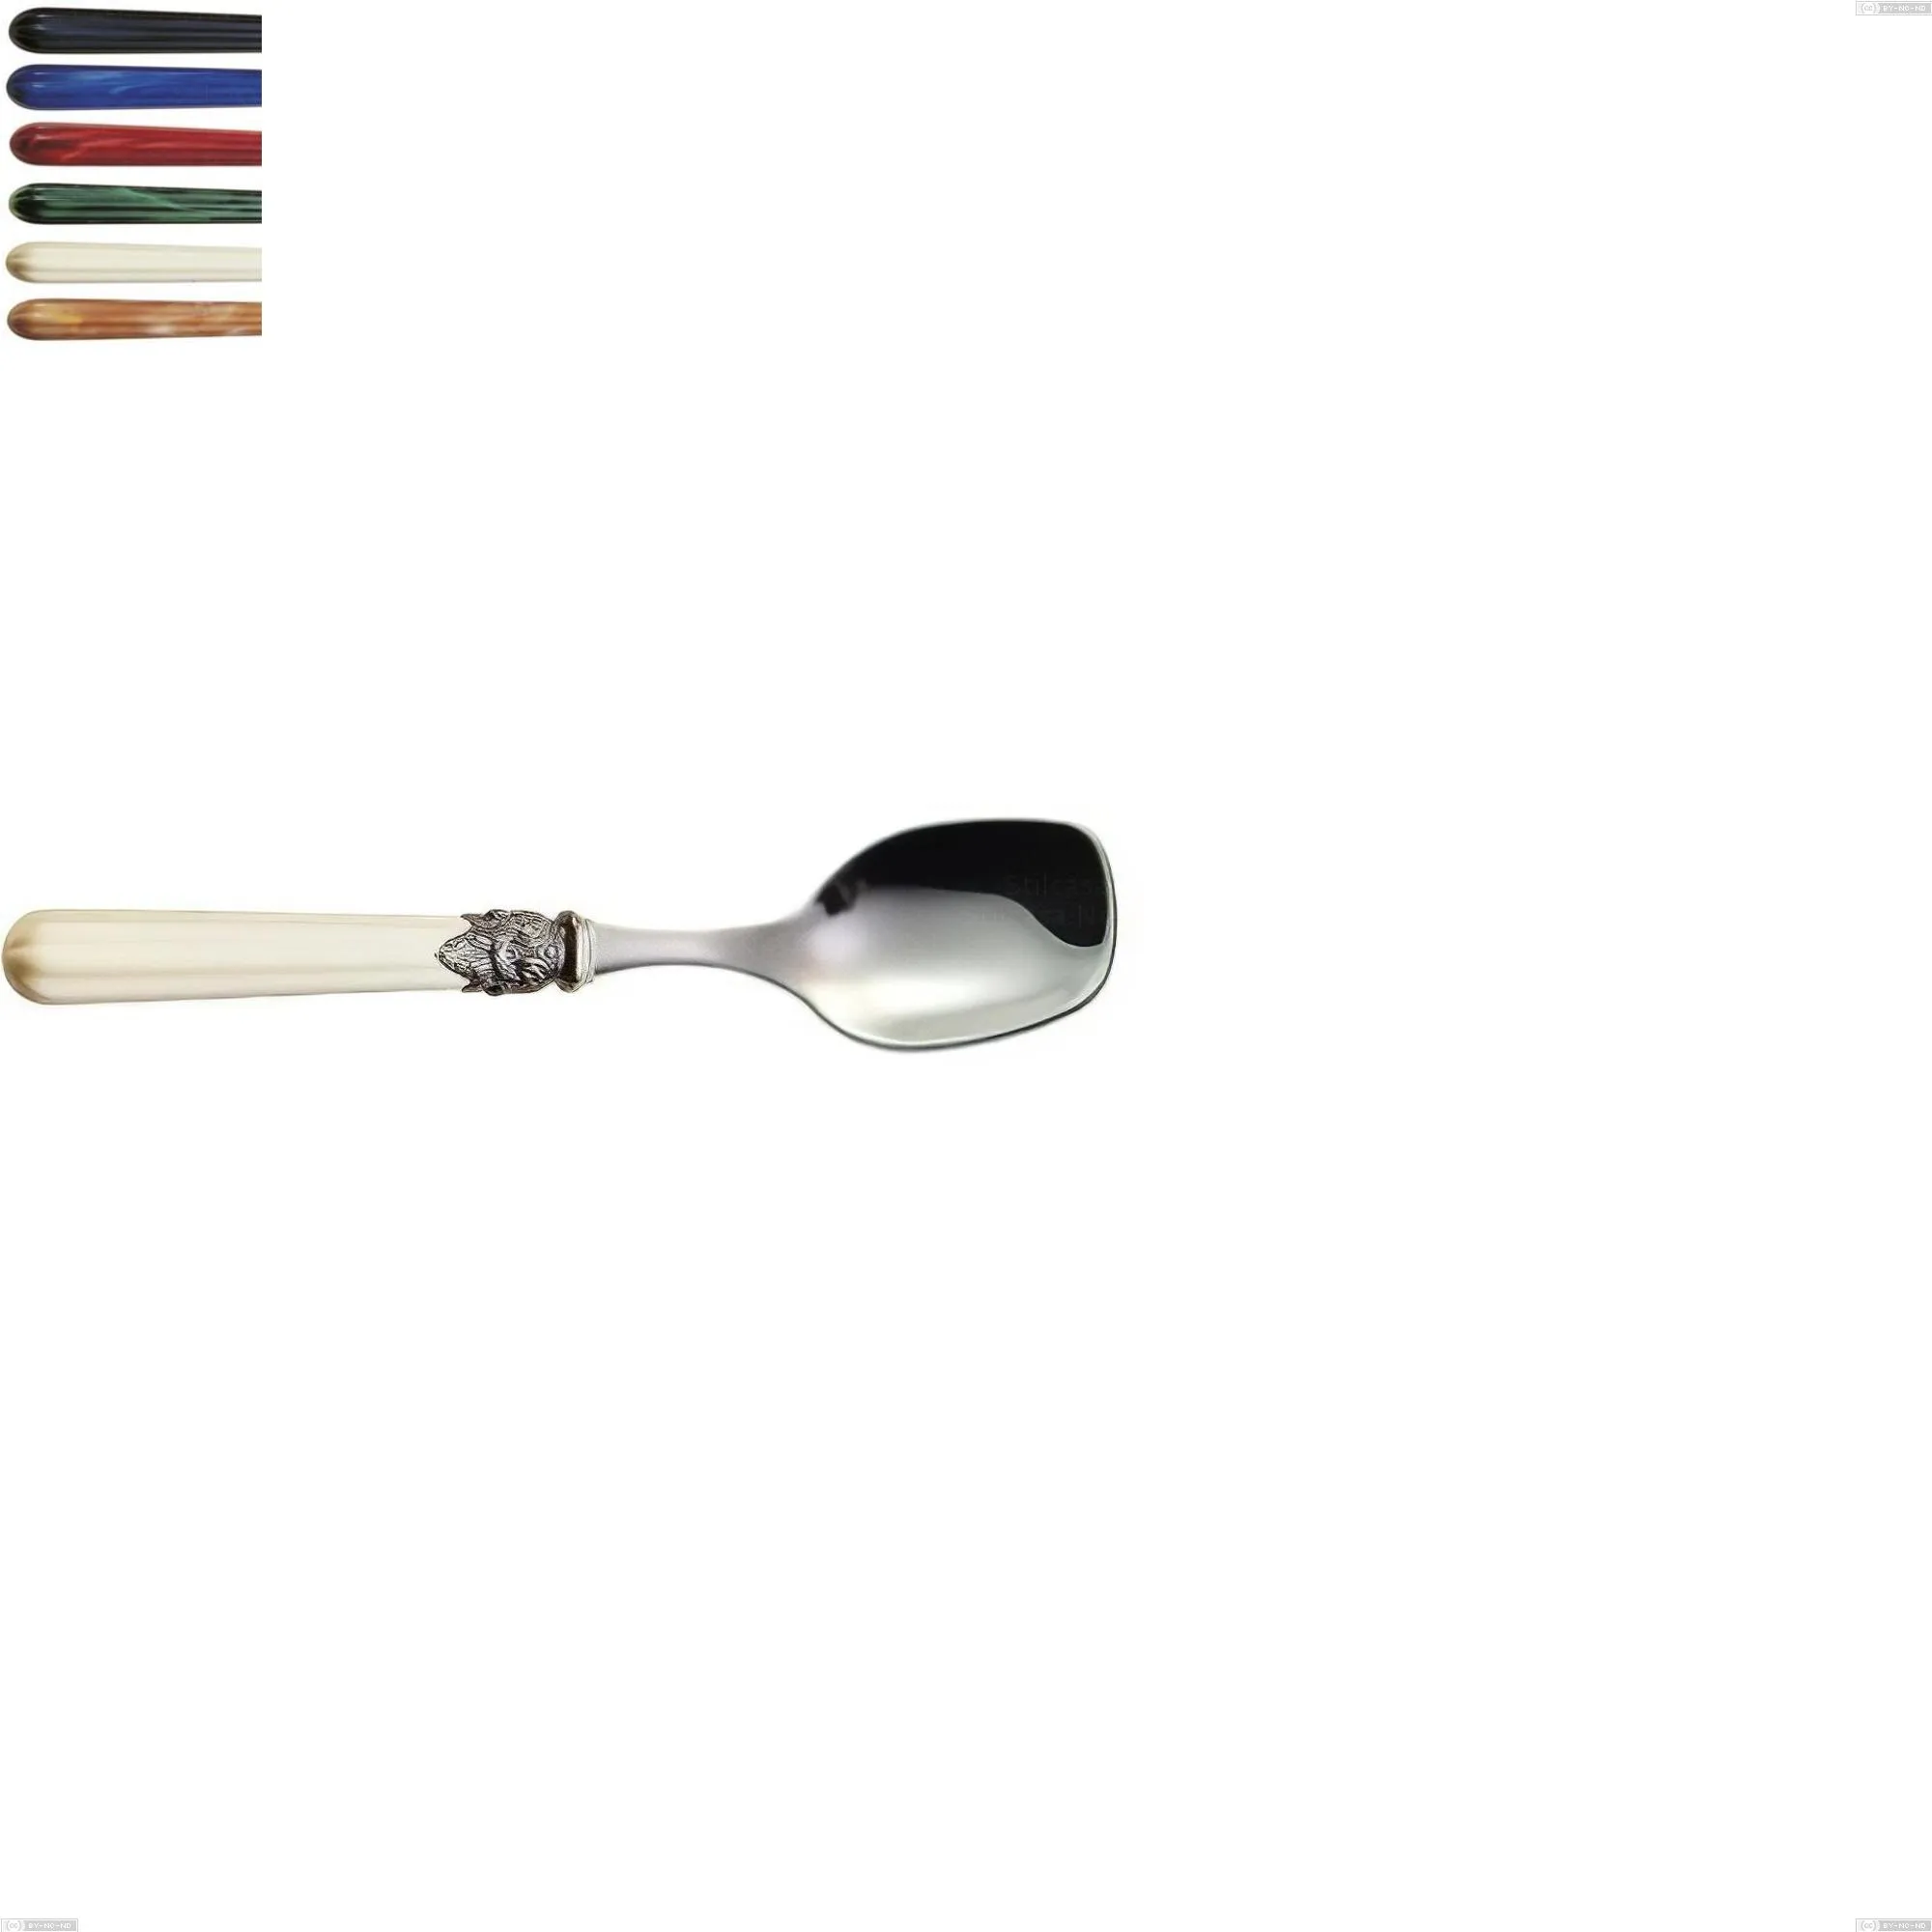 Cucchiaio gelato versailles, Acciaio 18/10 AISI 304 Lucido manicatura acrilico , lunghezza 149 mm